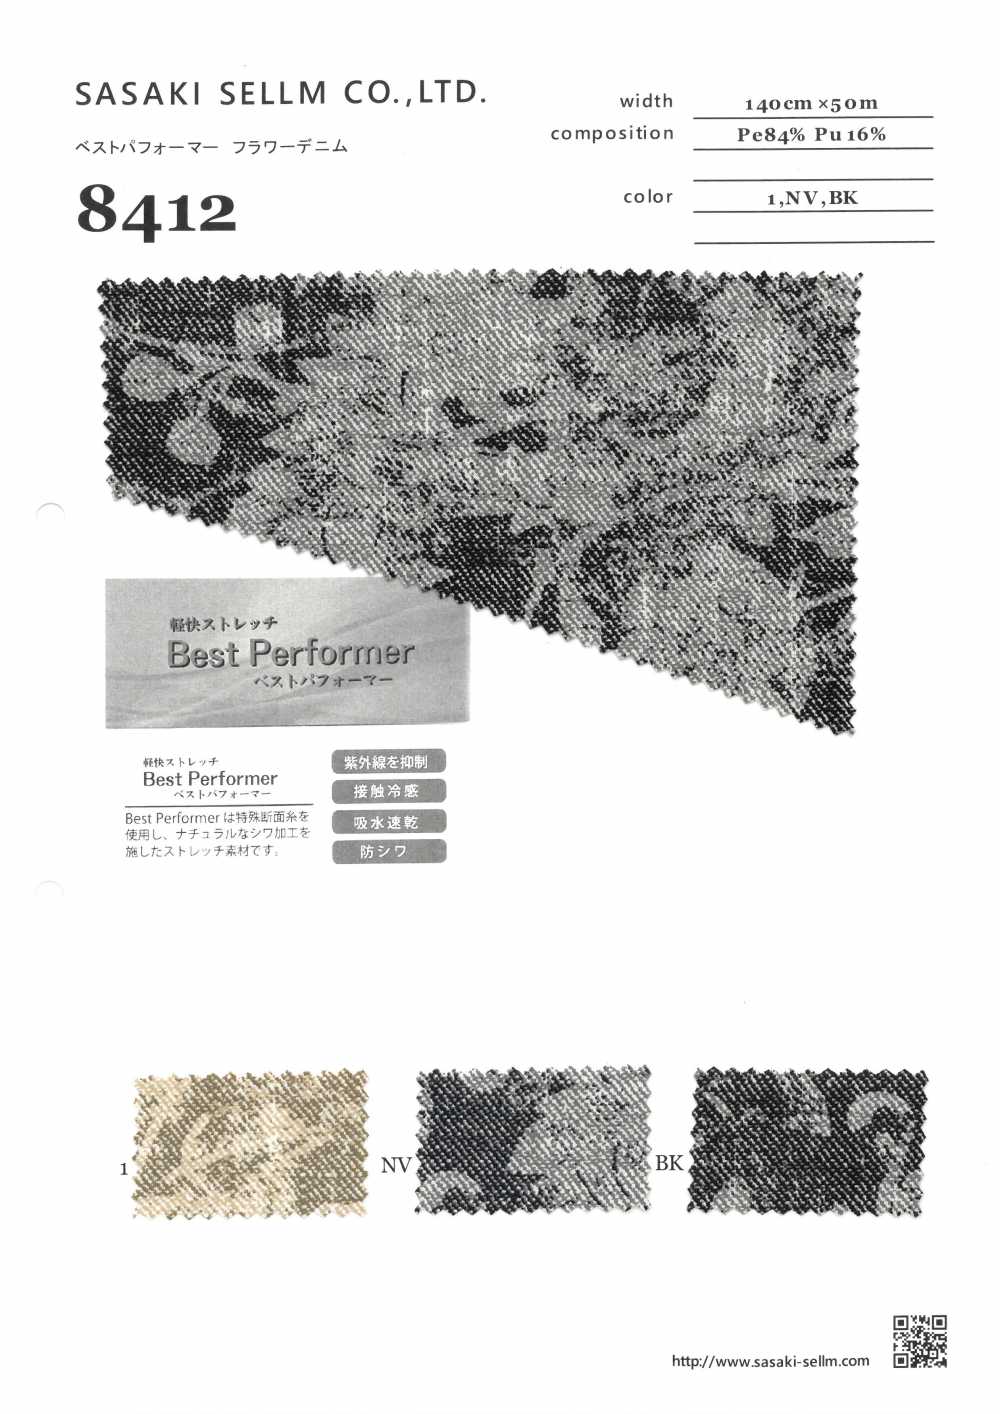 8412 Gilet Performer Flower Denim[Fabrication De Textile] SASAKISELLM